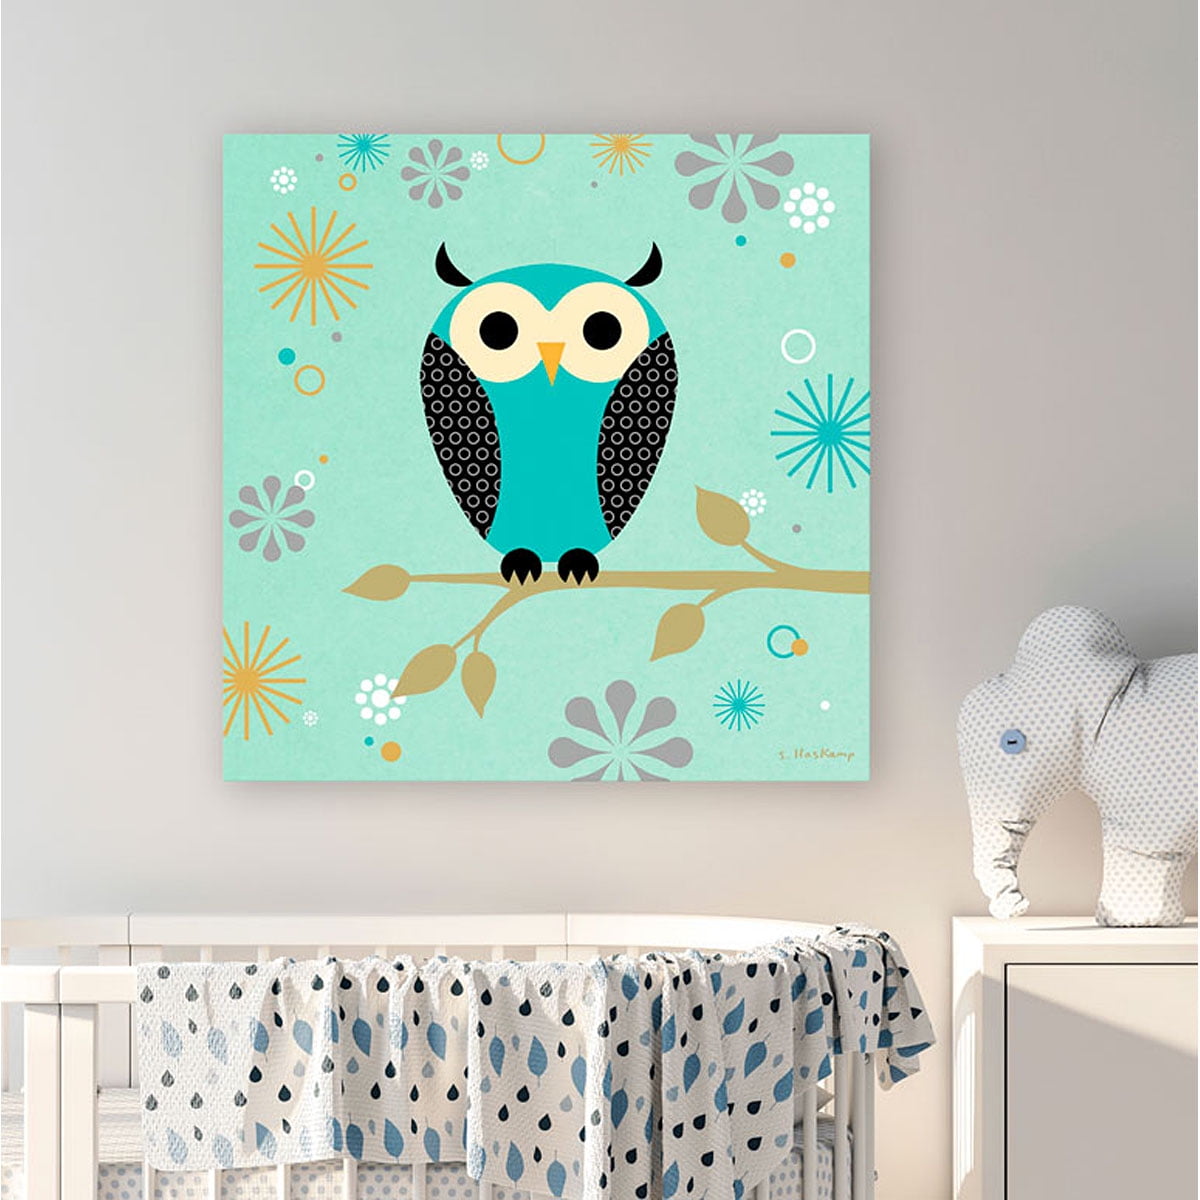 Oopsy Daisy Canvas Wall Art Blue Owl On A Branch 21x21 By Steve Haskamp Walmart Com Walmart Com